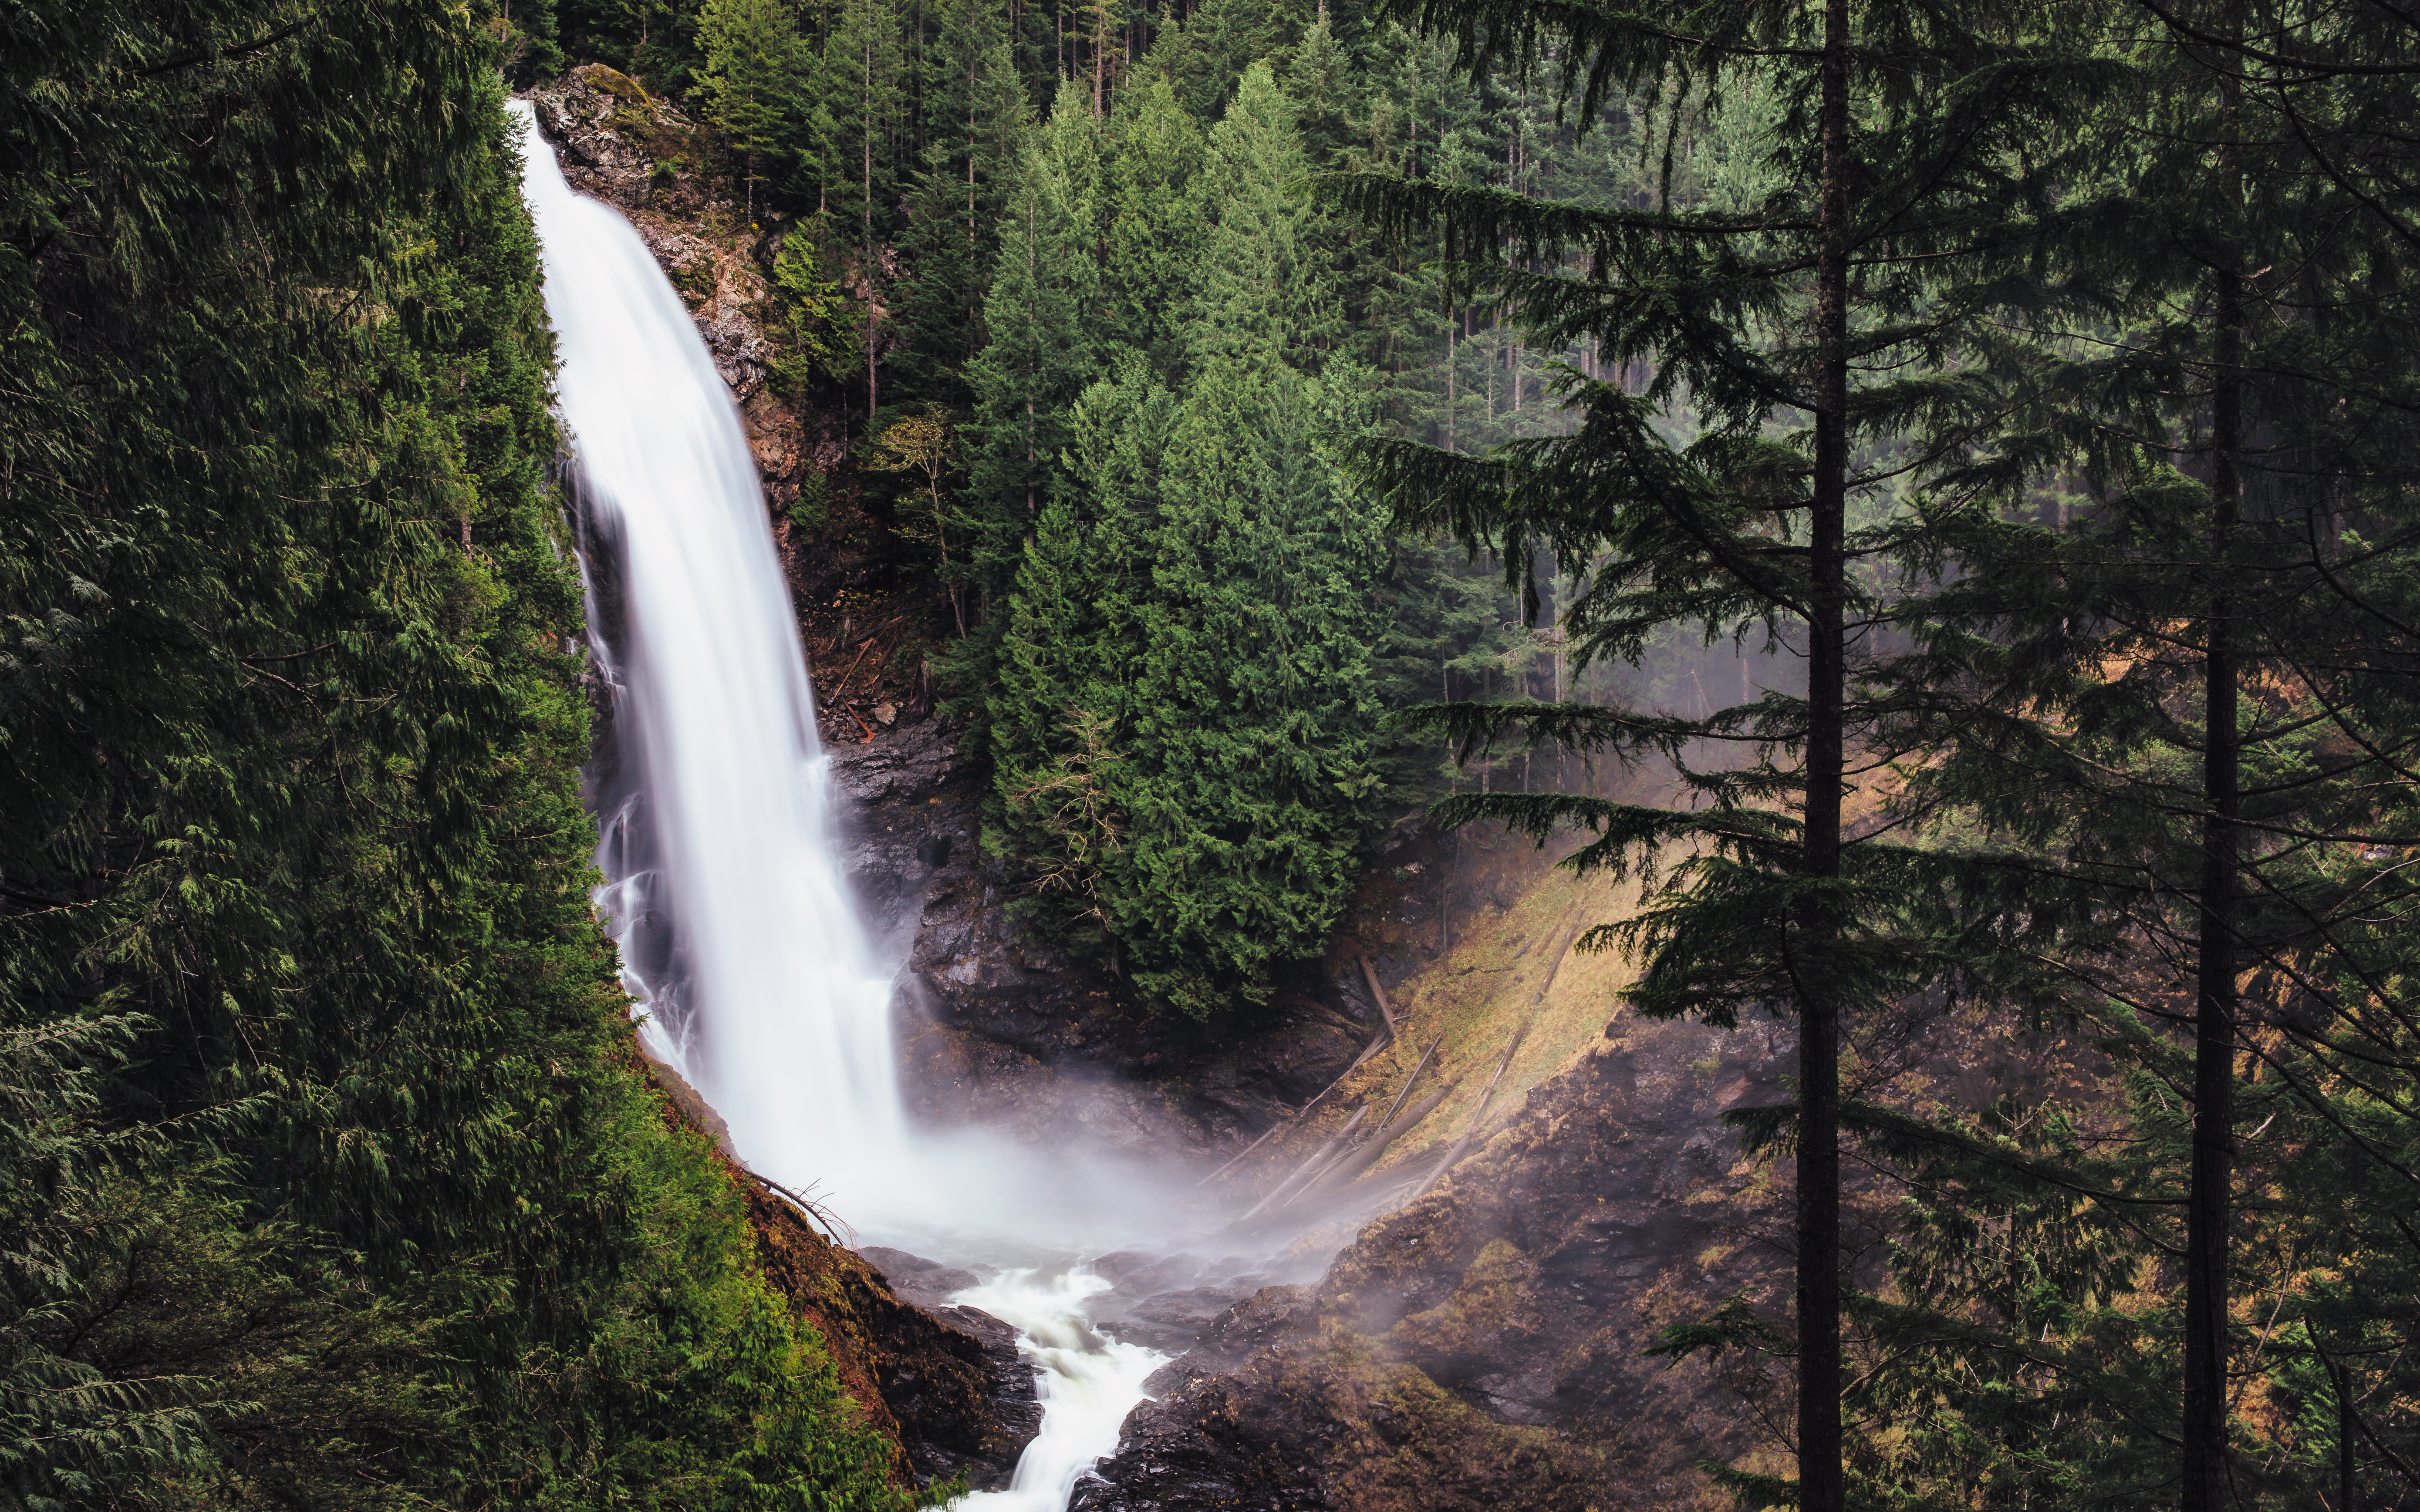 Pine falls